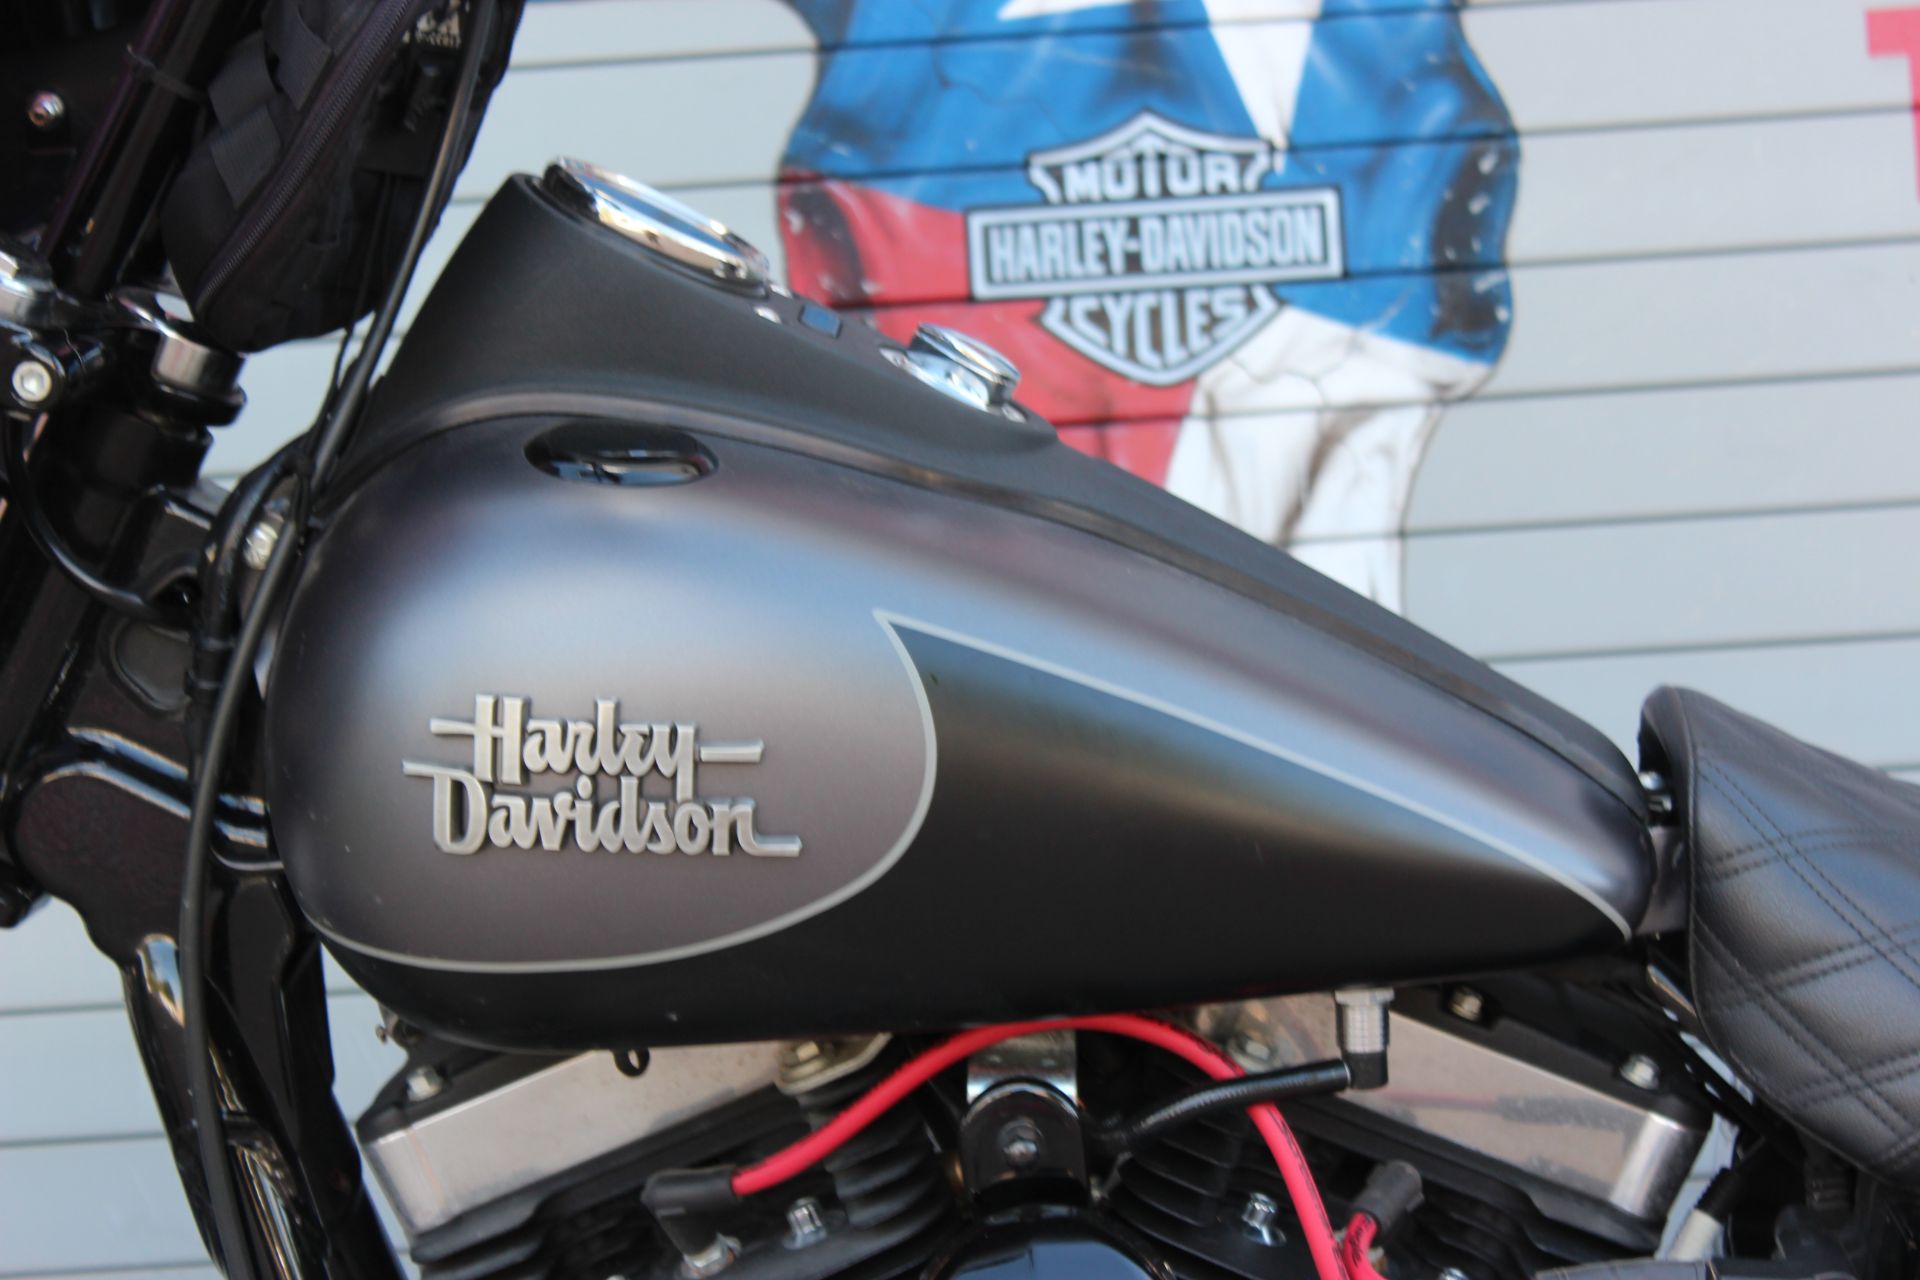 2017 Harley-Davidson Street Bob® in Grand Prairie, Texas - Photo 16